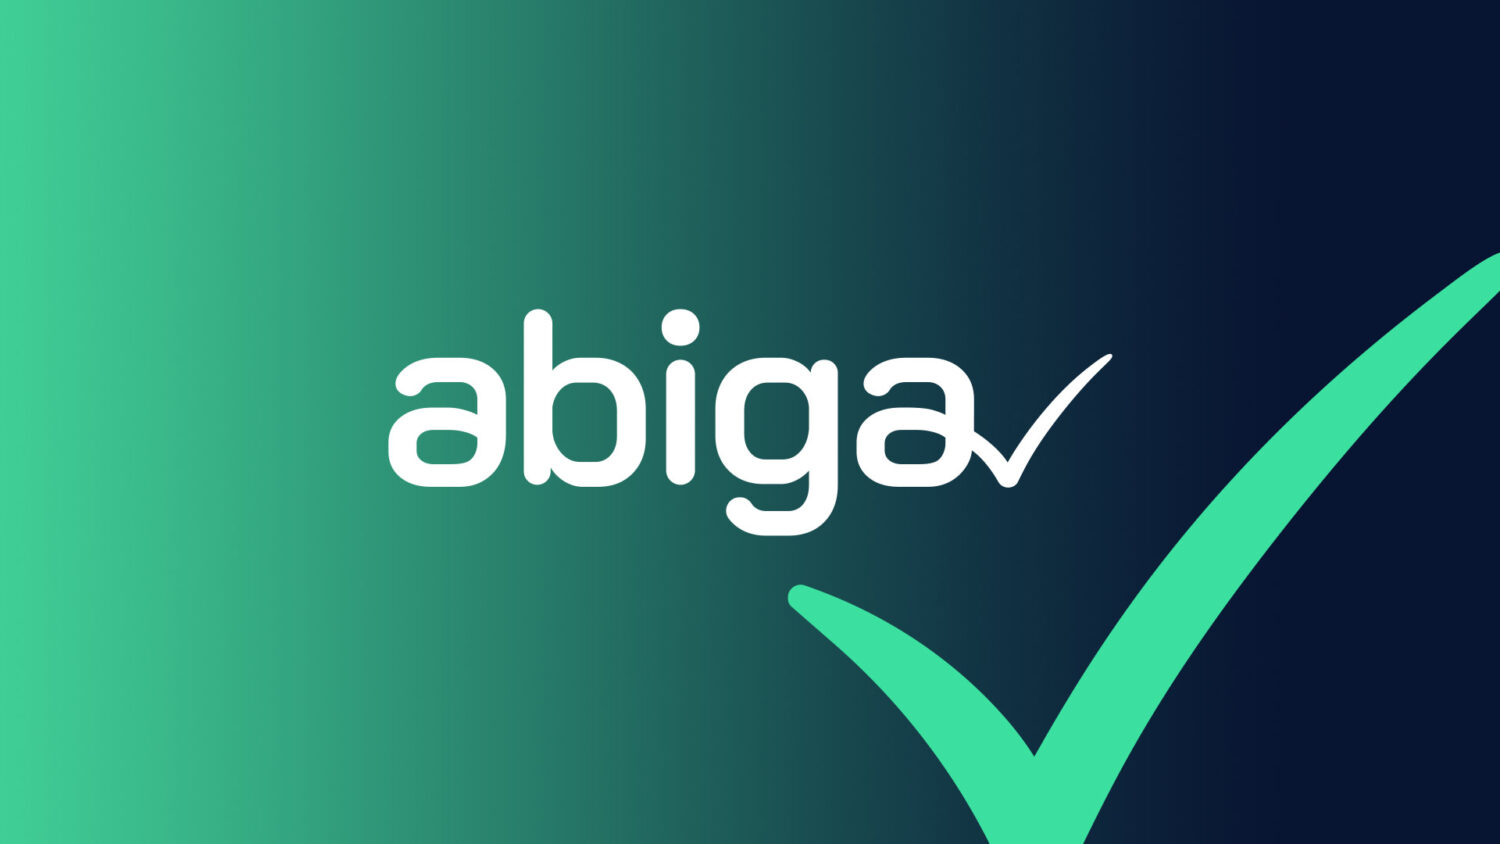 abiga - Brand development